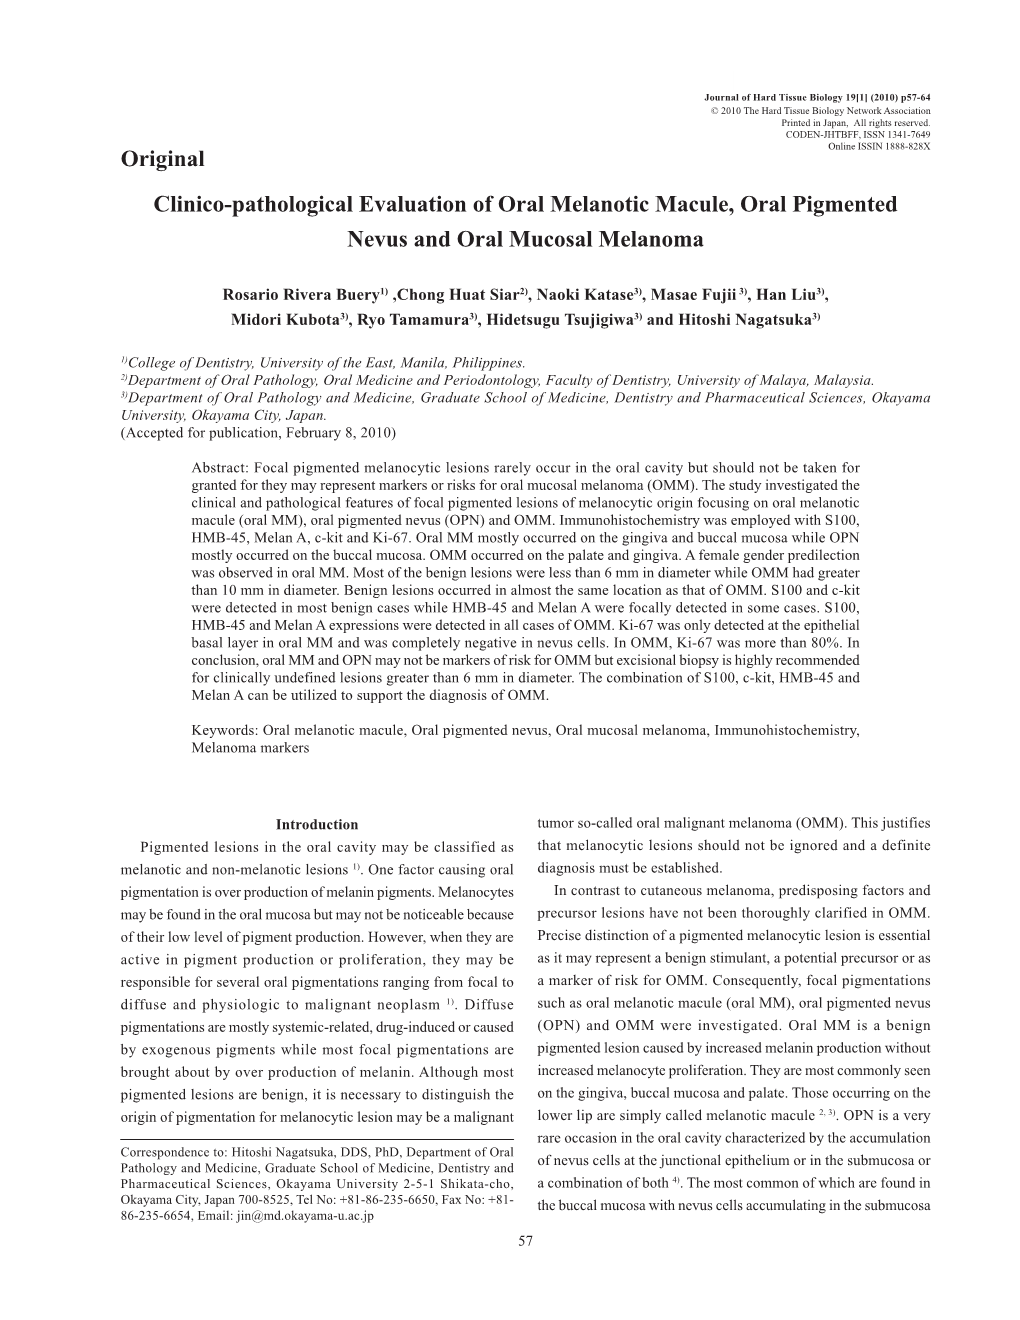 Clinico-Pathological Evaluation of Oral Melanotic Macule, Oral Pigmented Nevus and Oral Mucosal Melanoma